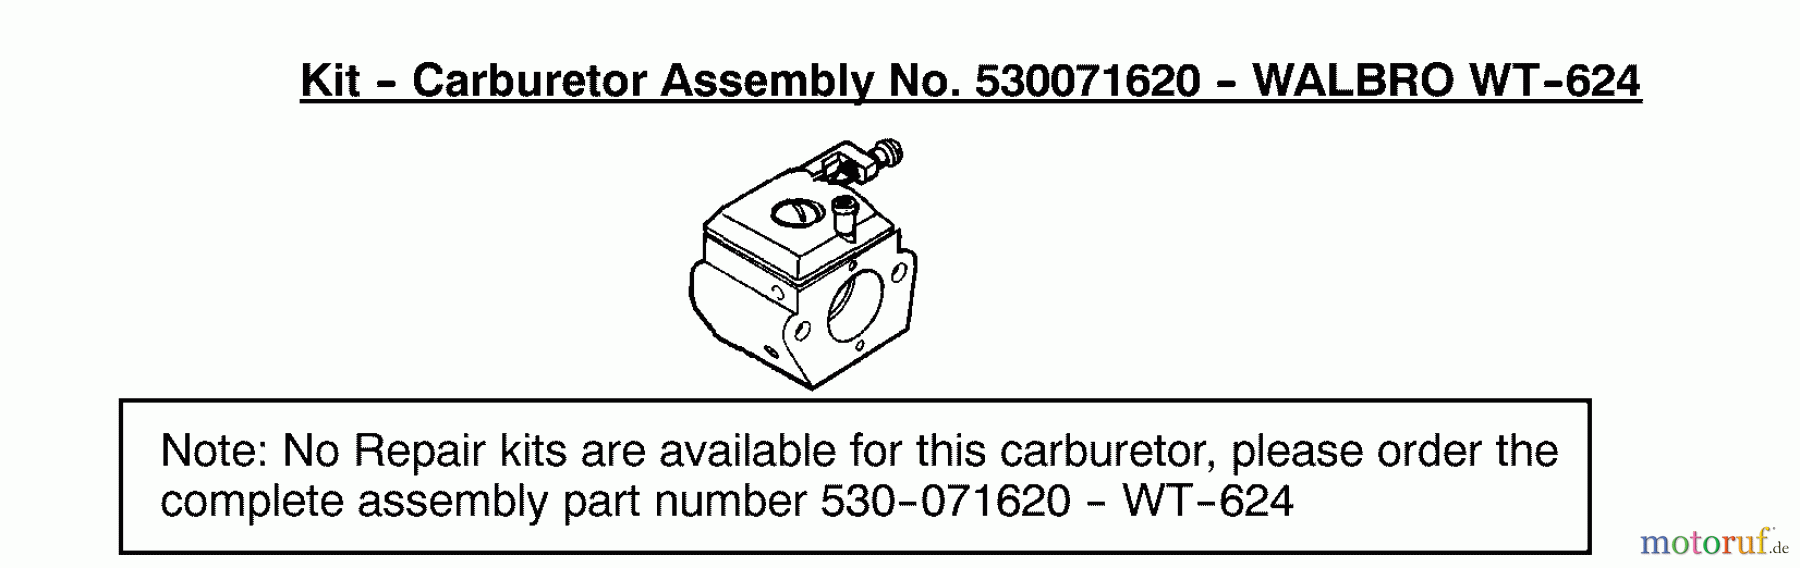  Poulan / Weed Eater Motorsägen 2075 (Type 4) - Poulan Chainsaw Carburetor Assembly (Walbro WT624) P/N 530071620